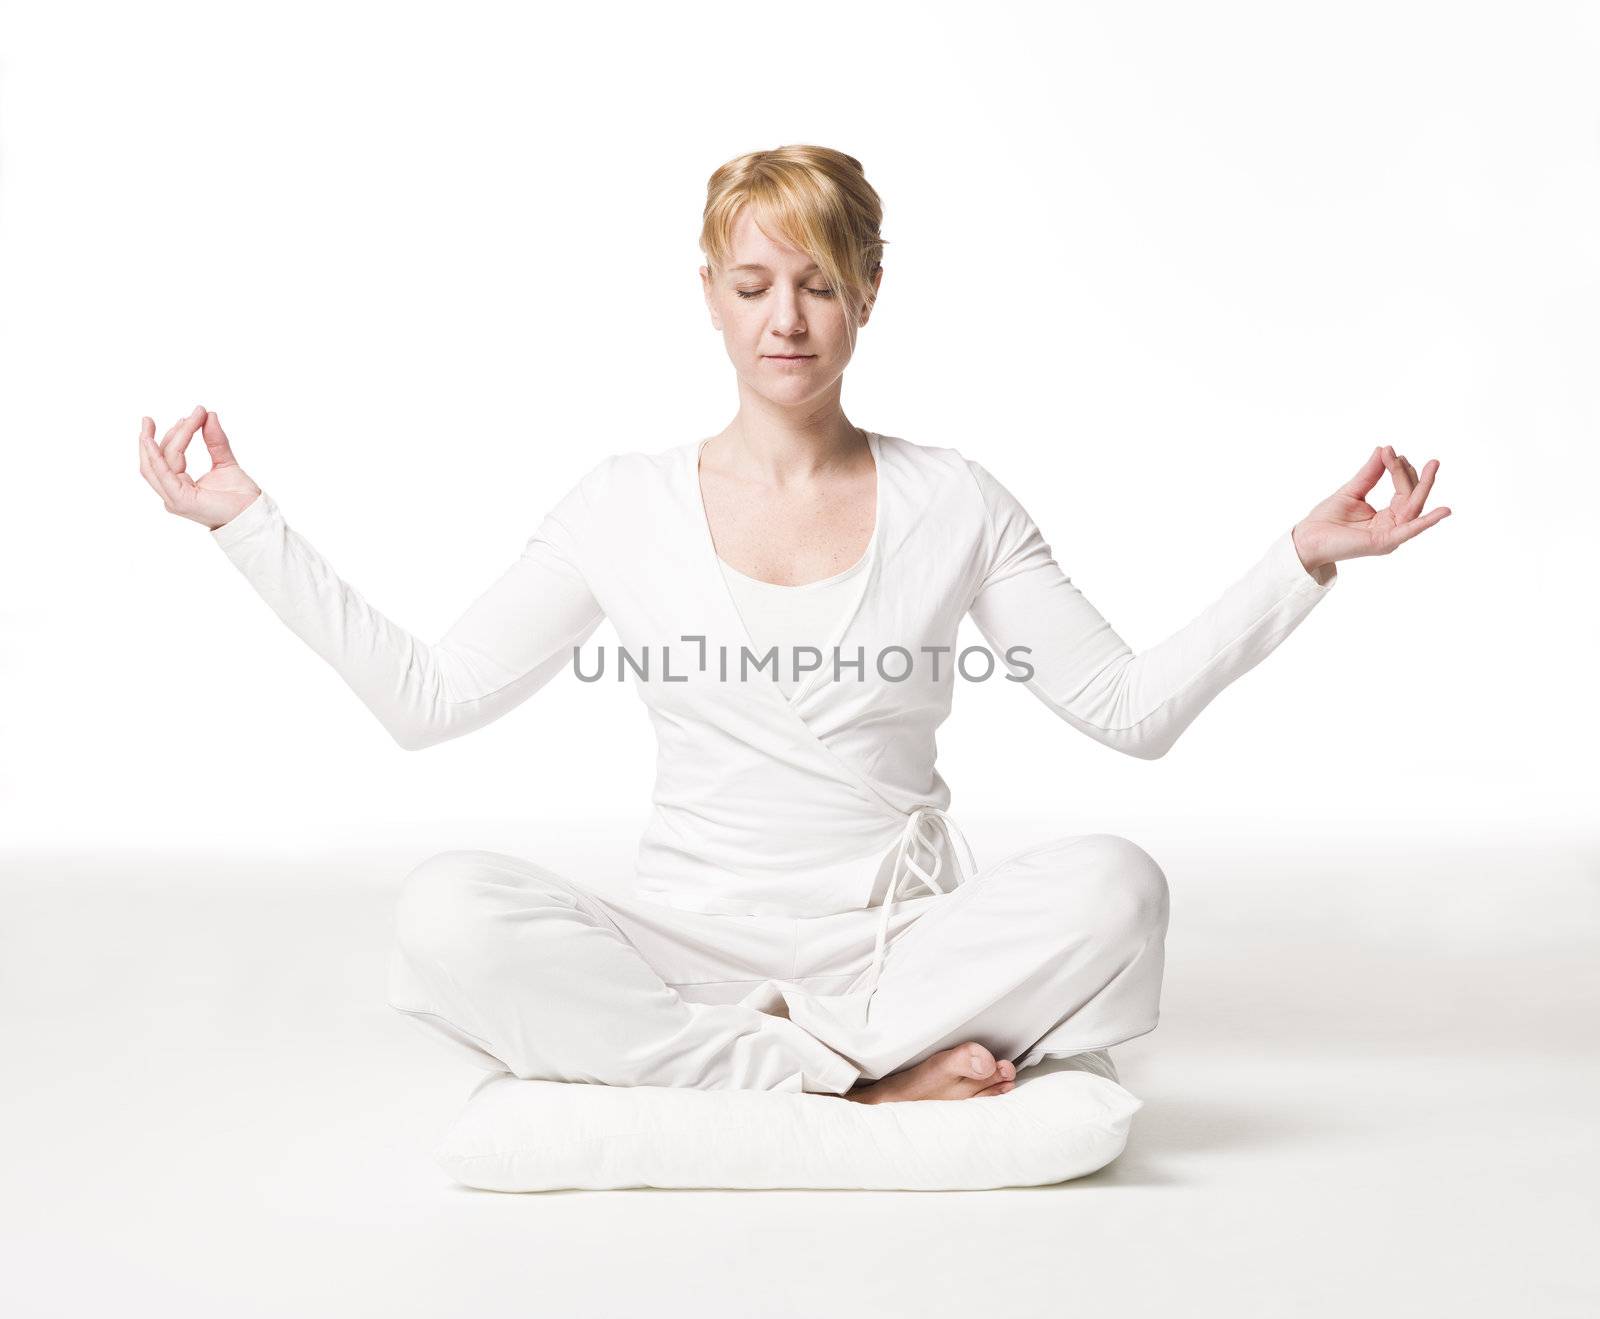 Woman meditating